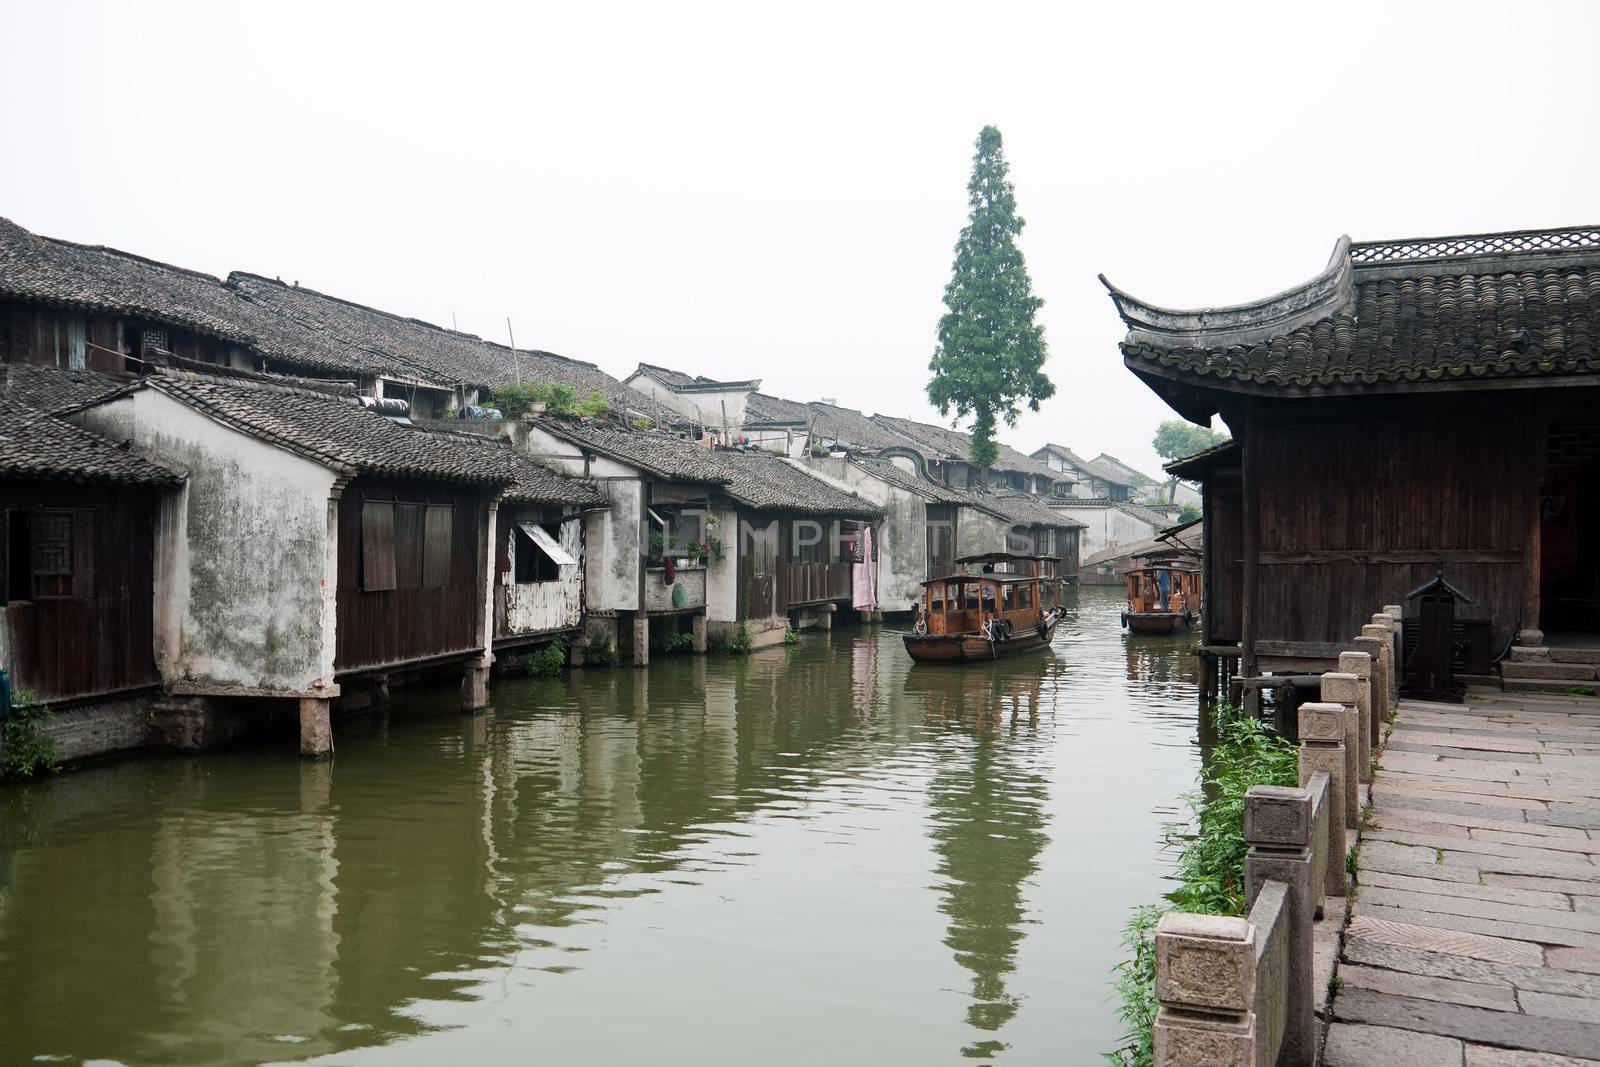 Ancient building near the river in Wuzhen town, Zhejiang province, China